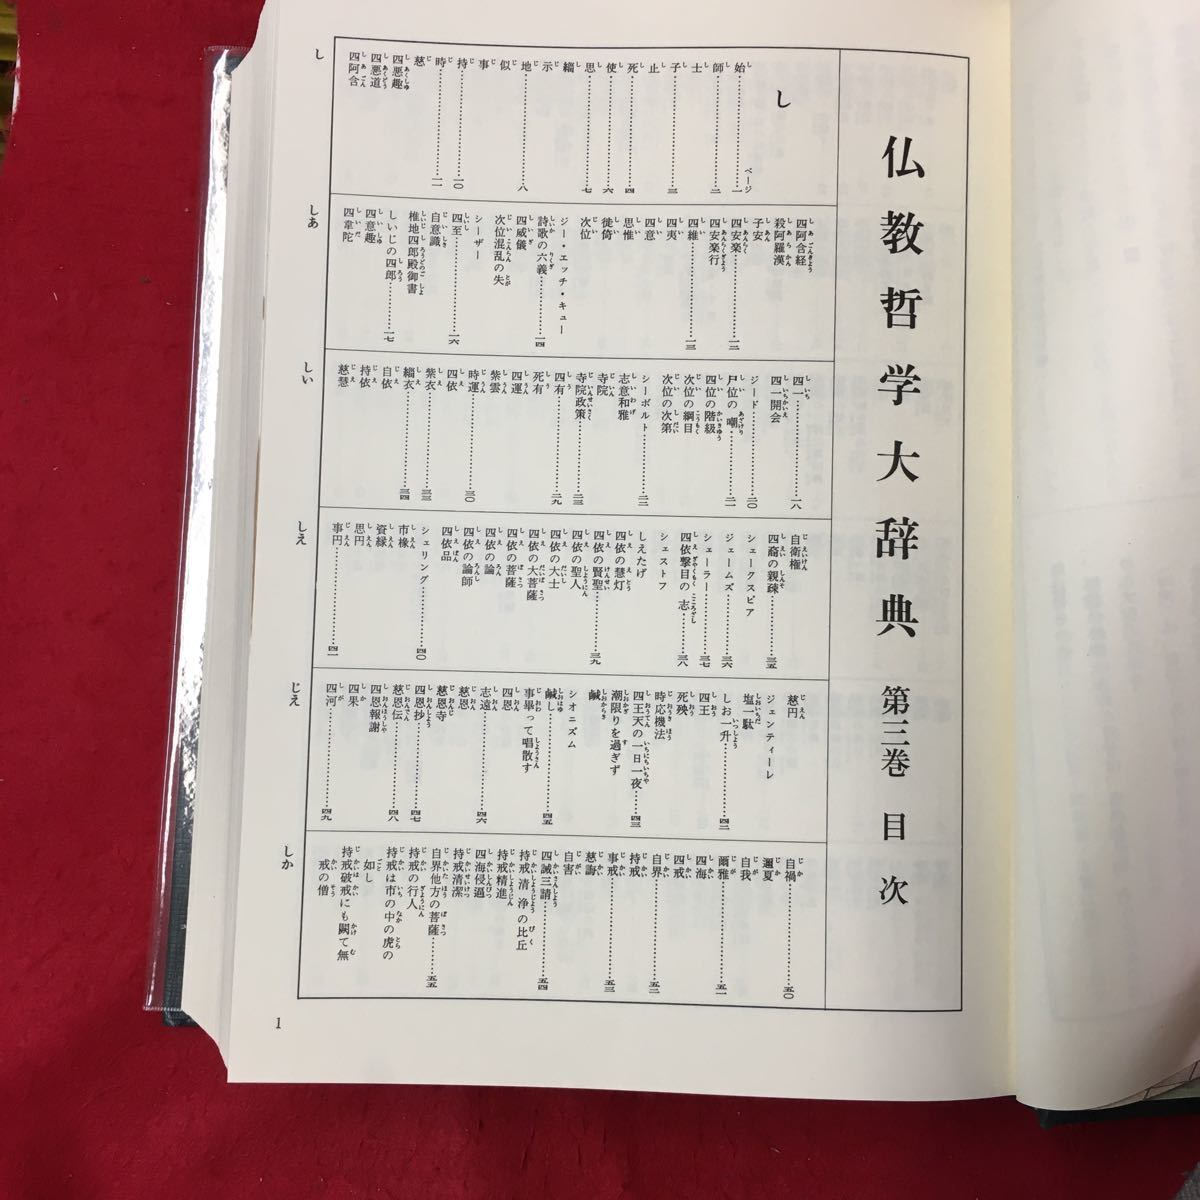 f-002 Buddhism philosophy large dictionary no. 3 volume .~.. religion juridical person . cost .. Ikeda Daisaku Showa era 49 year no. 3. issue *13